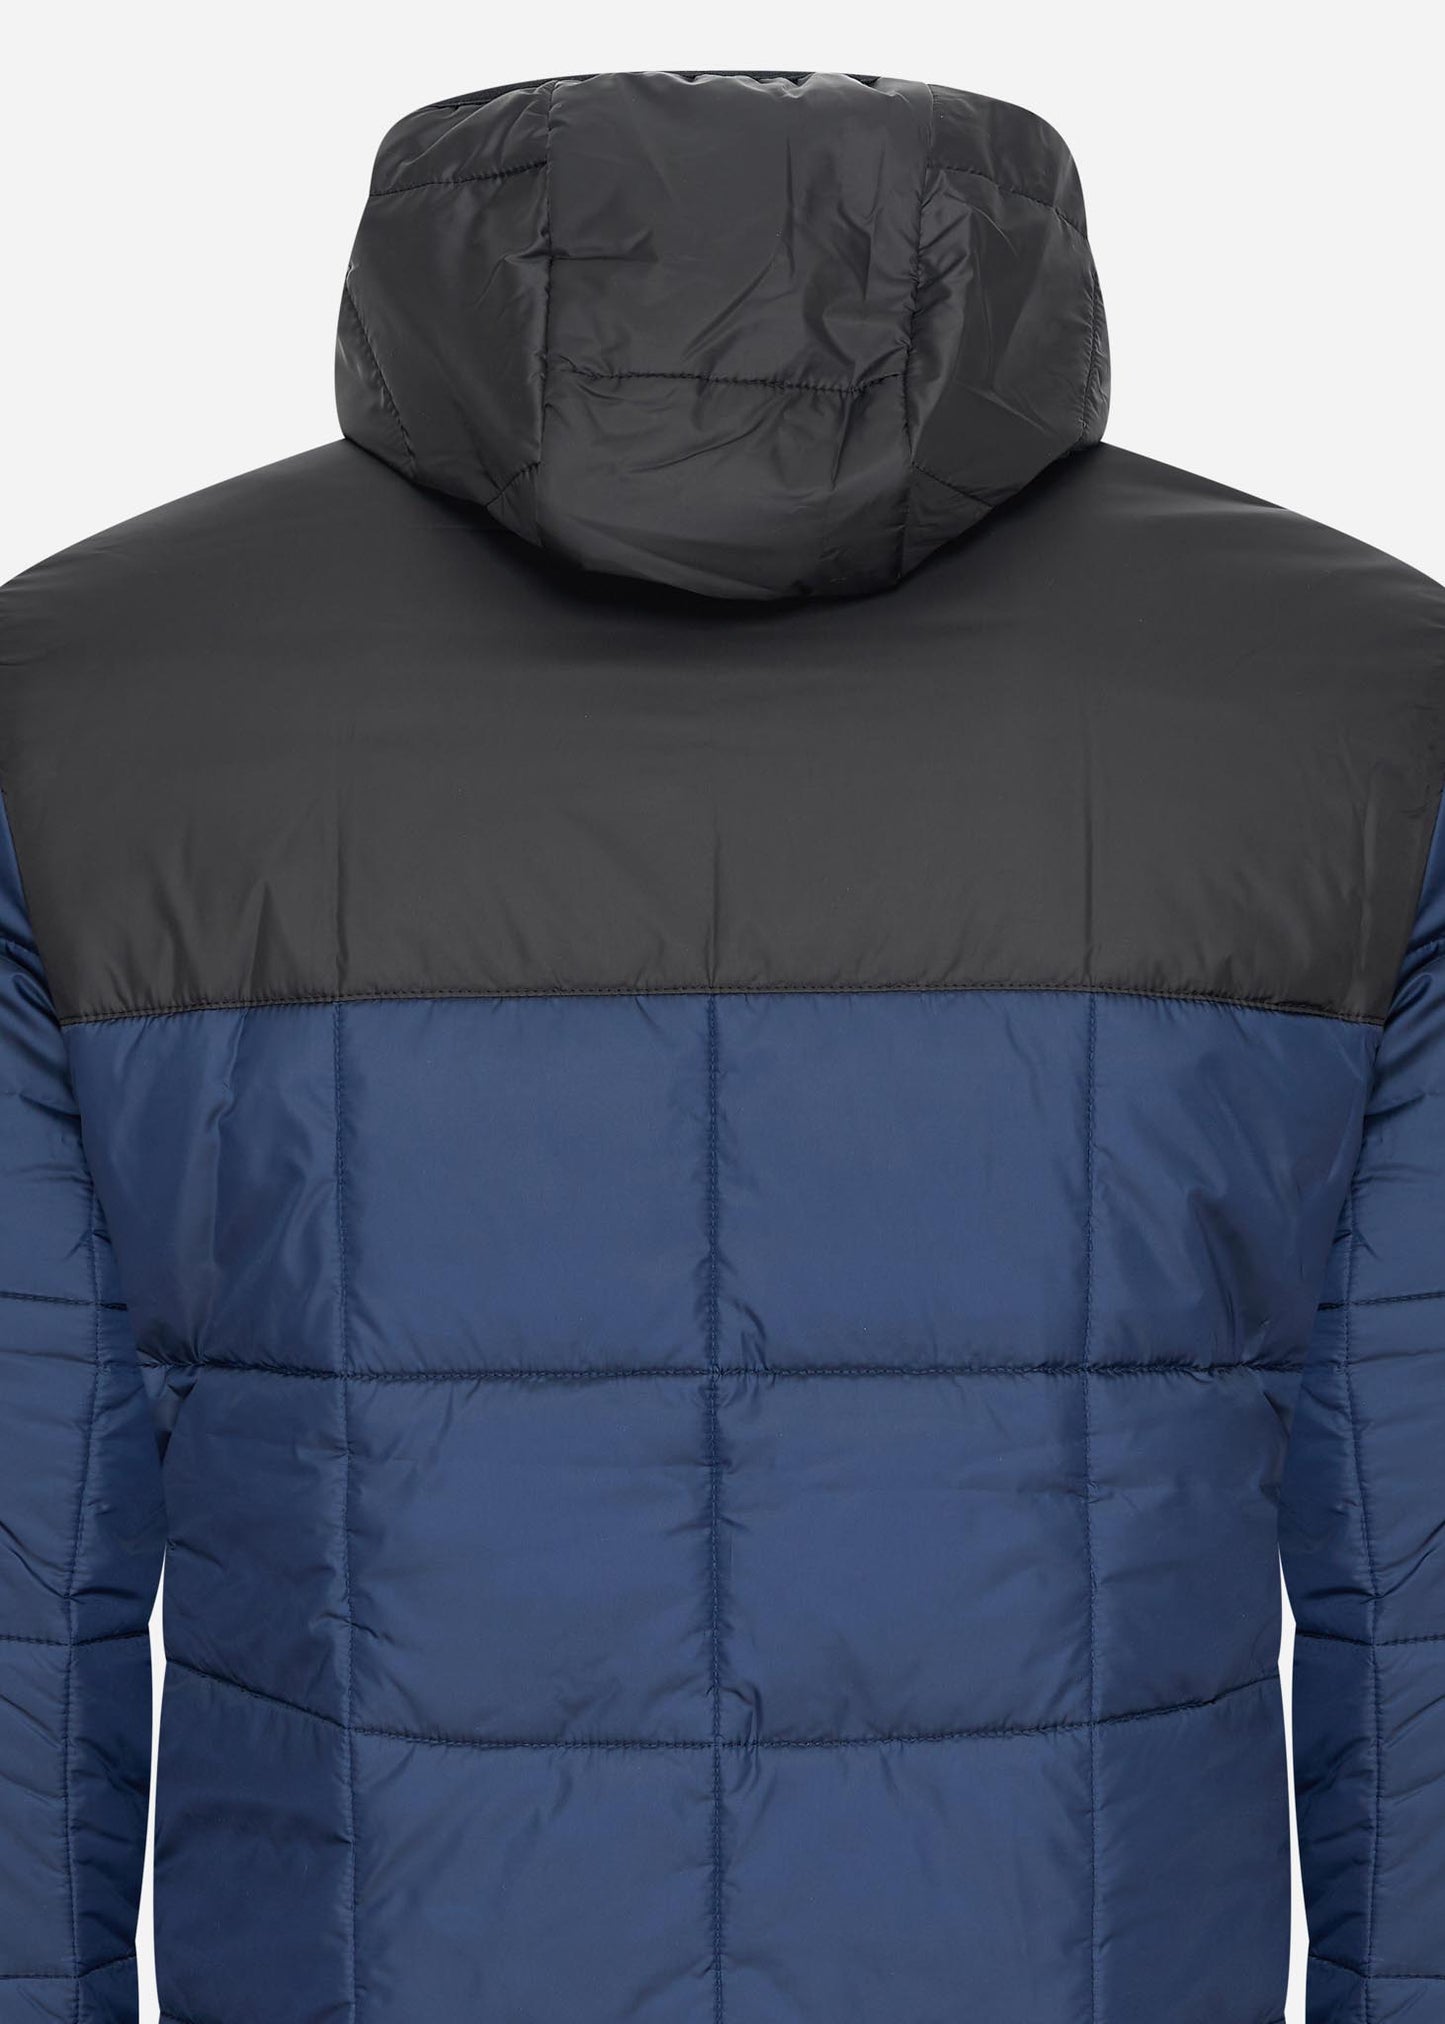 Lacoste Jassen  Puffer jacket - navy blue black 